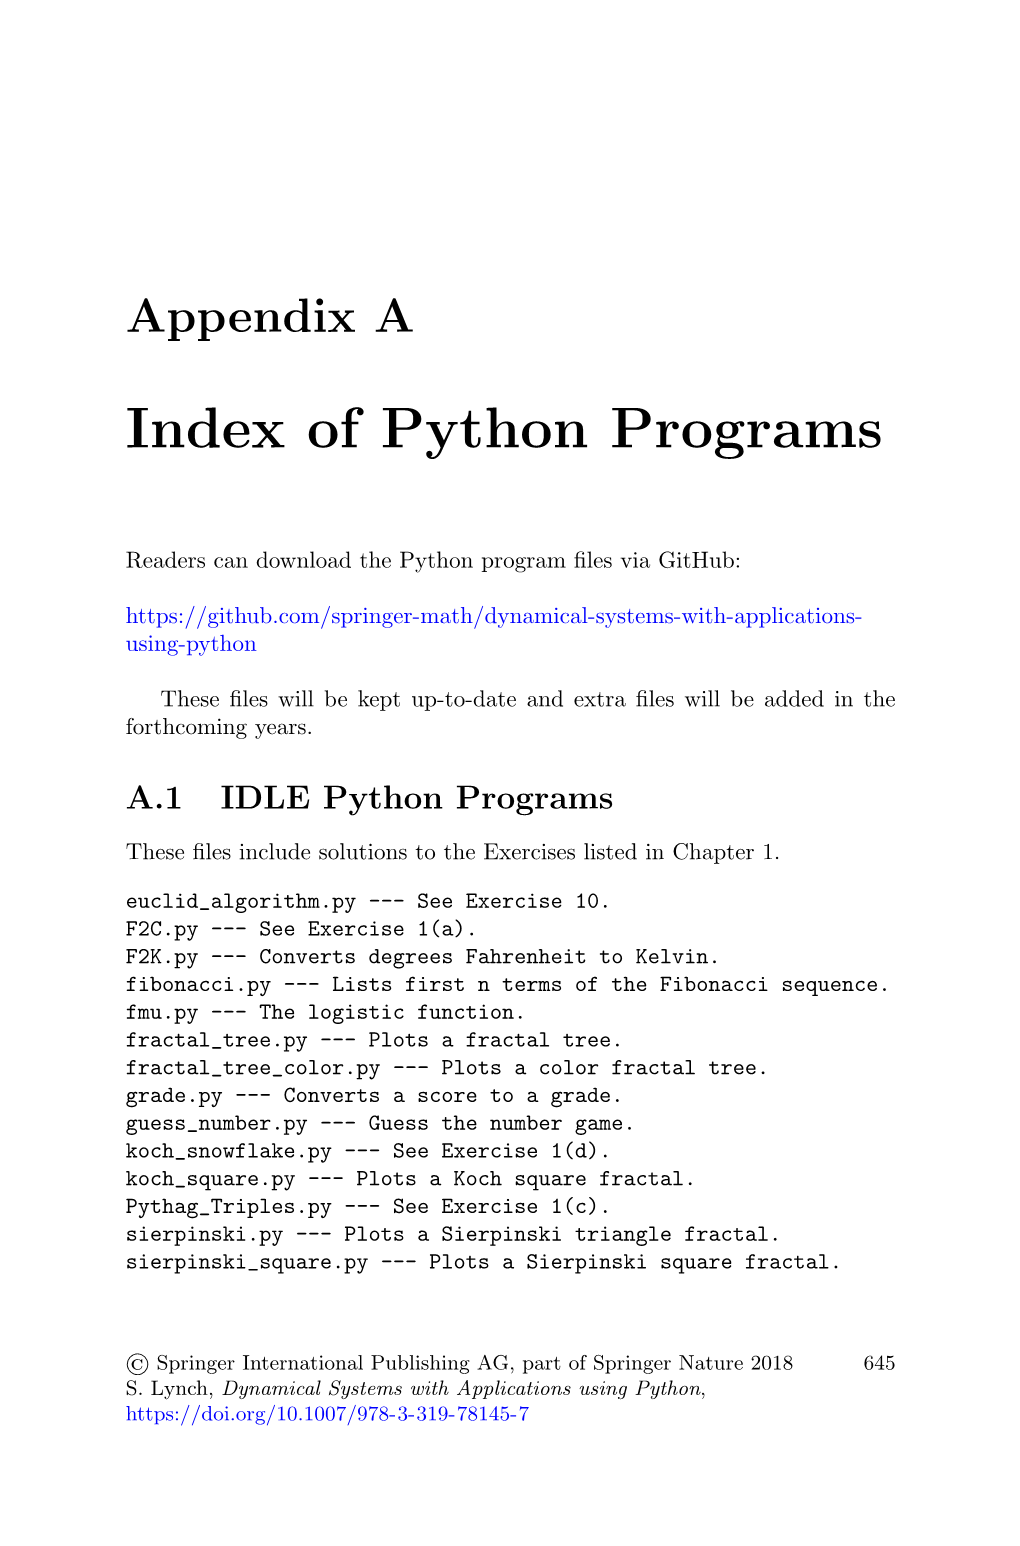 Index of Python Programs